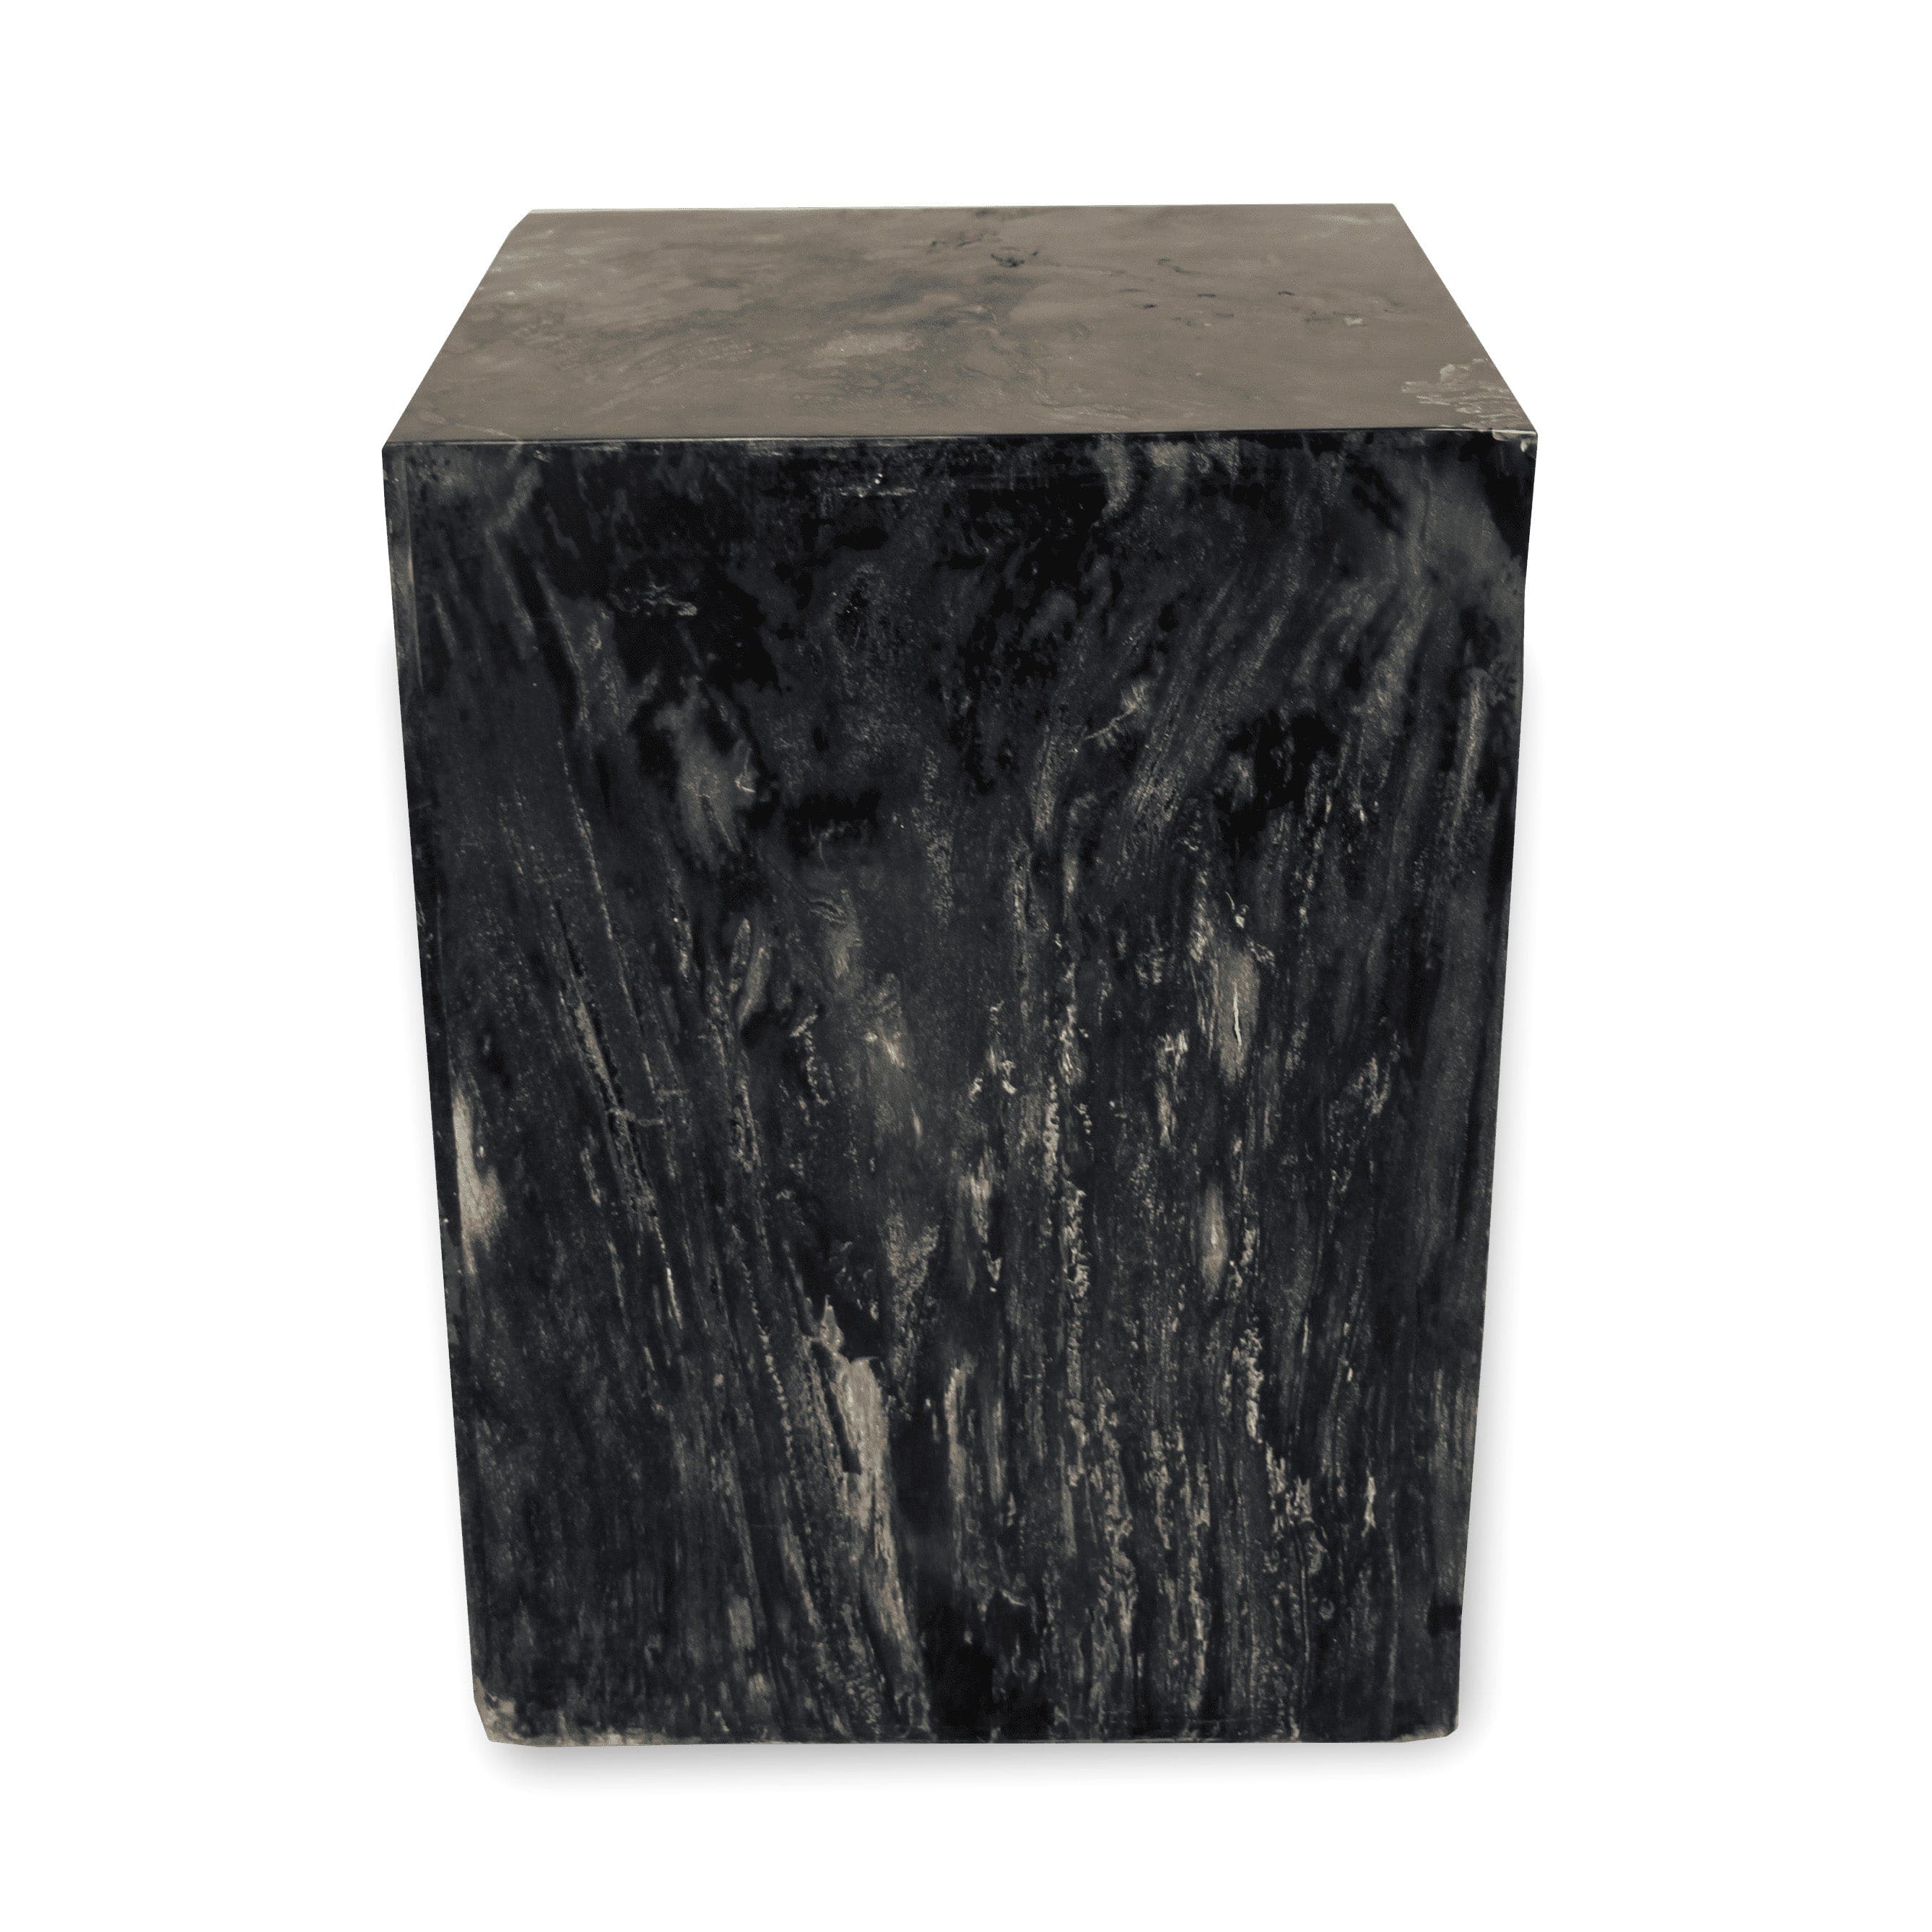 Kalifano Petrified Wood Petrified Wood Square Stump / Stool from Indonesia - 18" / 245 lbs PWSS6800.001